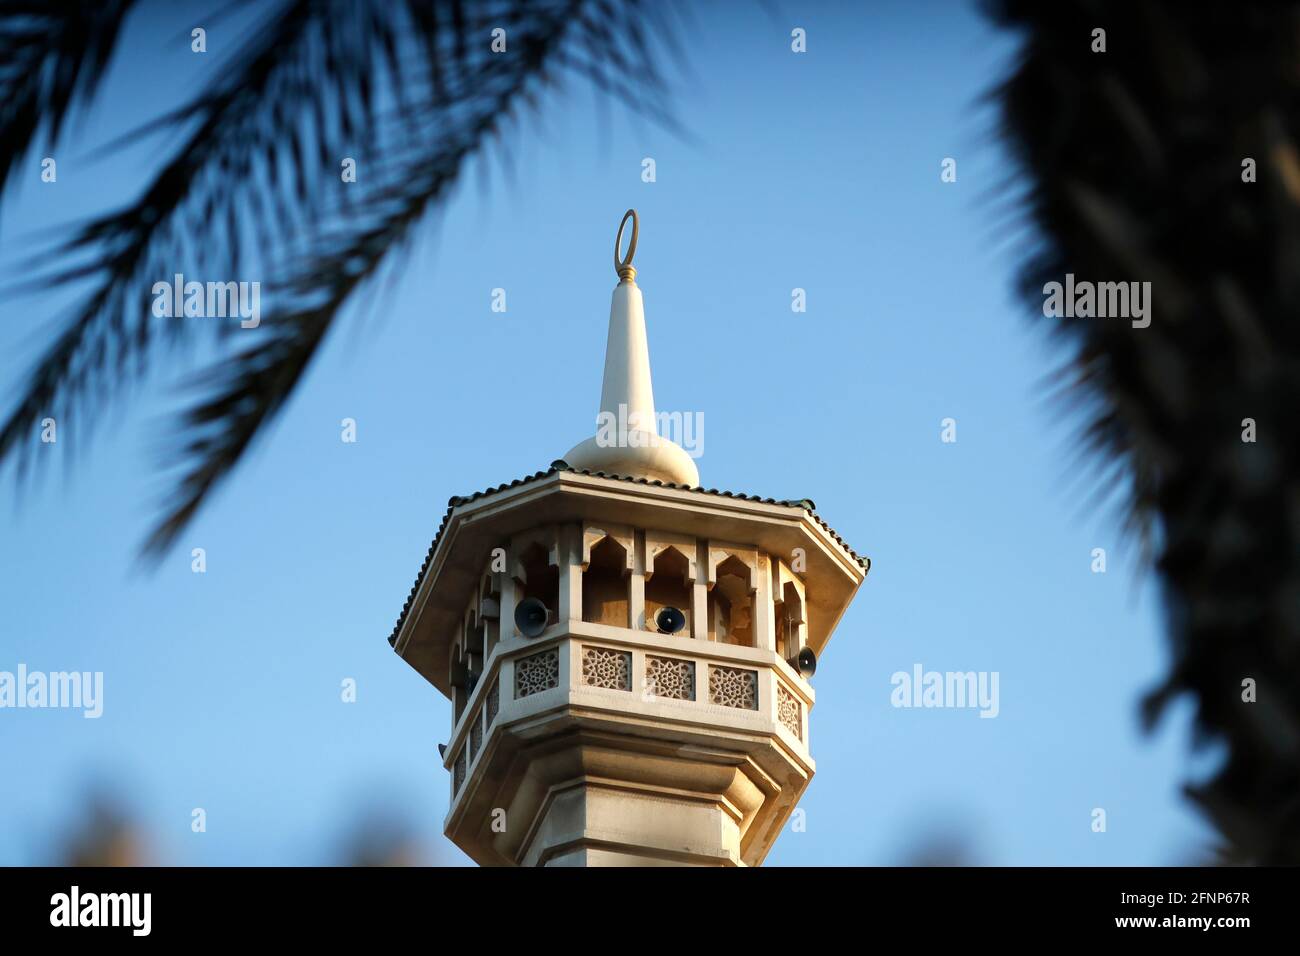 Al Farooq mosque. The minaret.  Dubai. United Arab Emirates Stock Photo